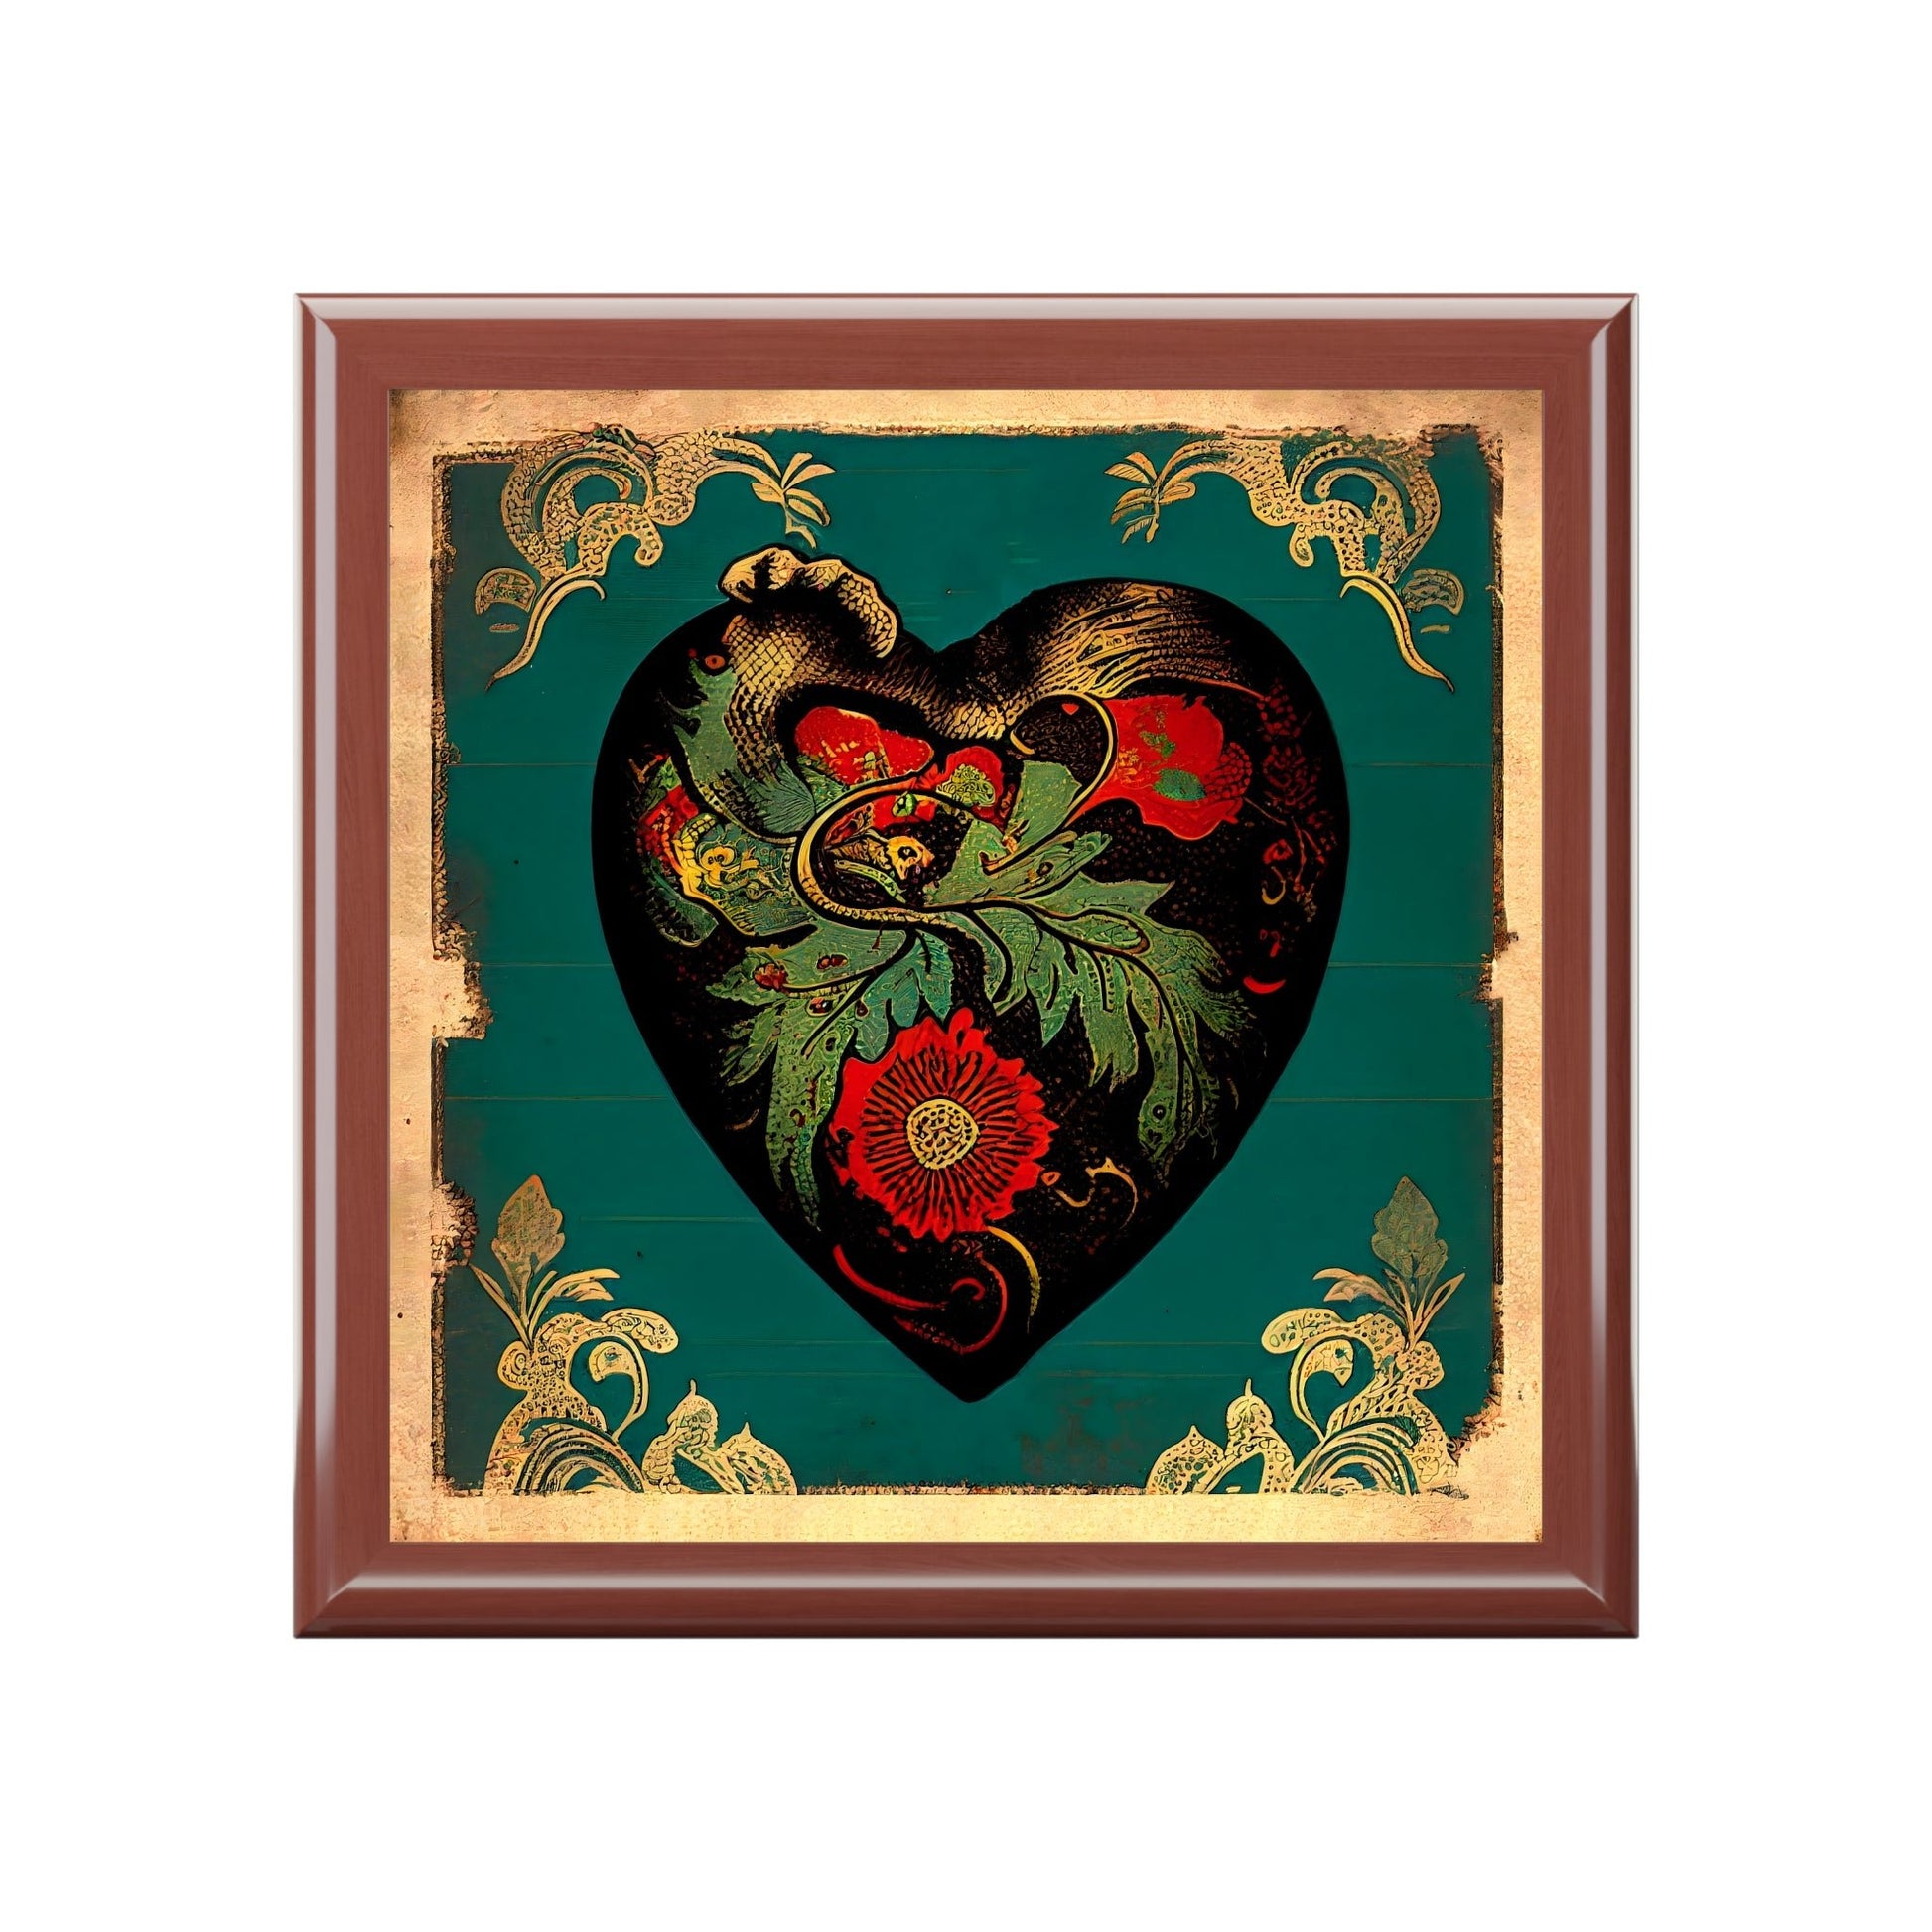 Ancient Chinese Folk Art Heart Jewelry Box